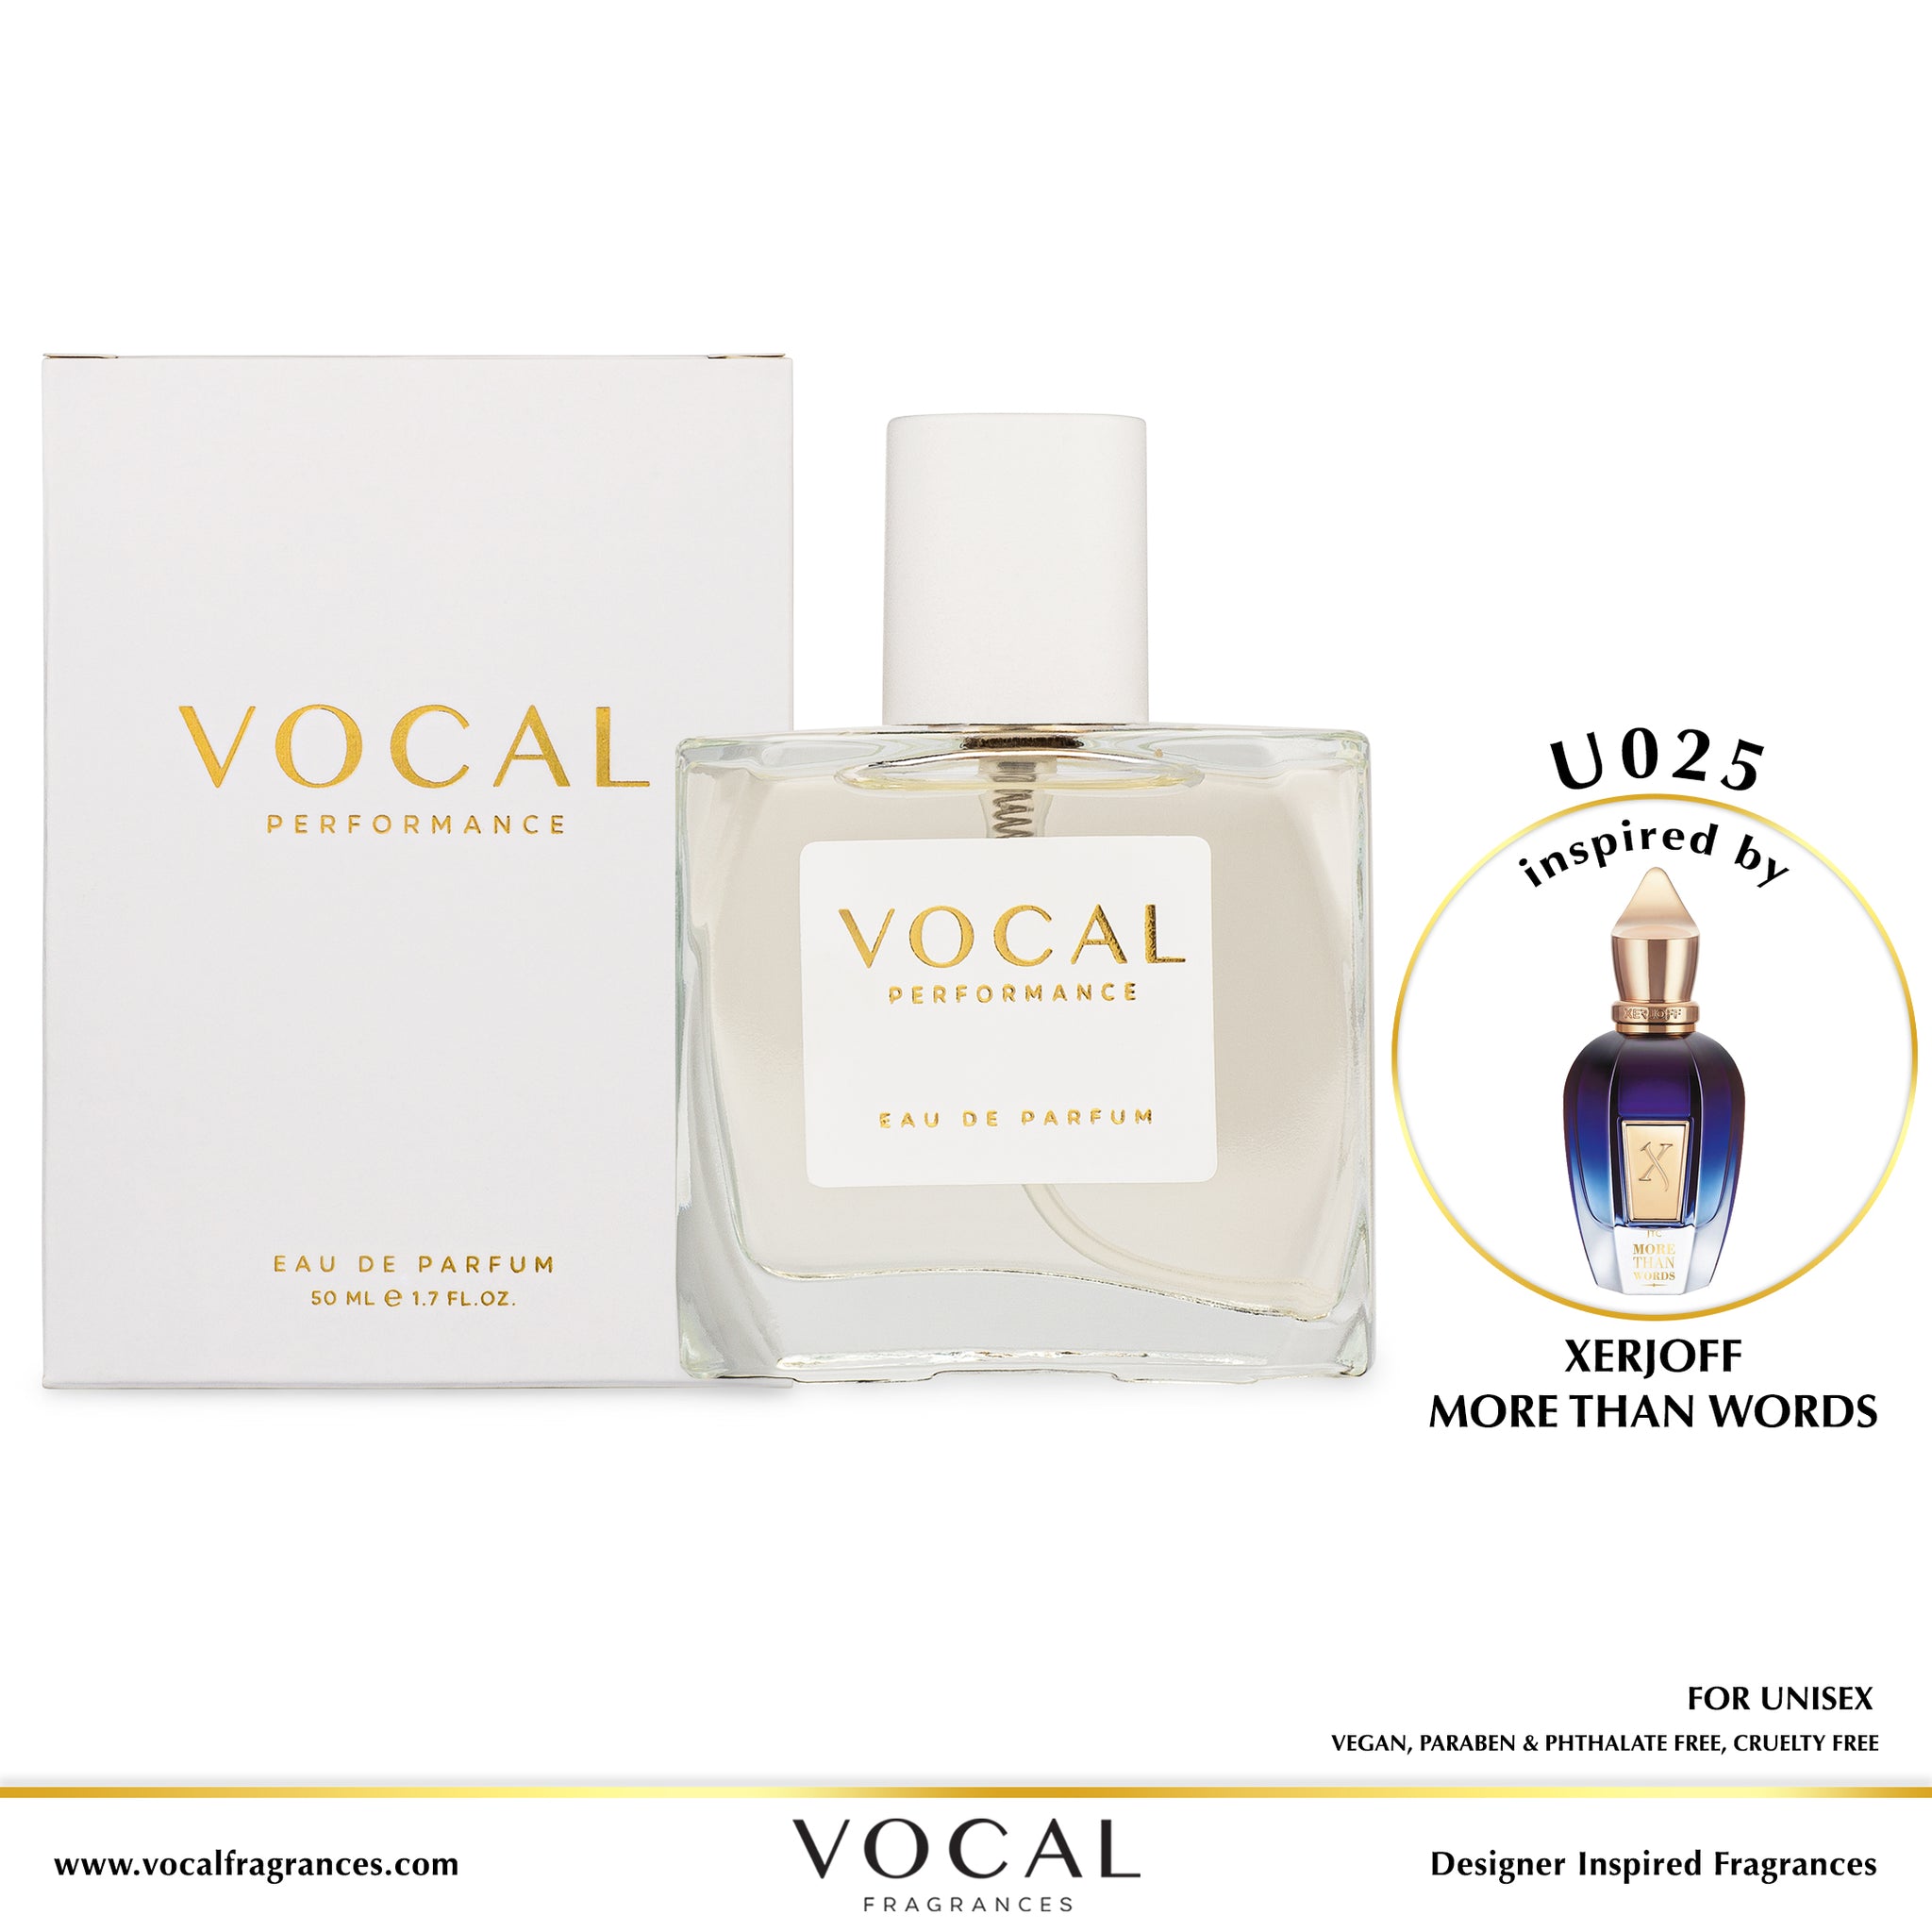 U025 Vocal Performance Eau De Parfum For Unisex Inspired by Xerjoff More Than Words